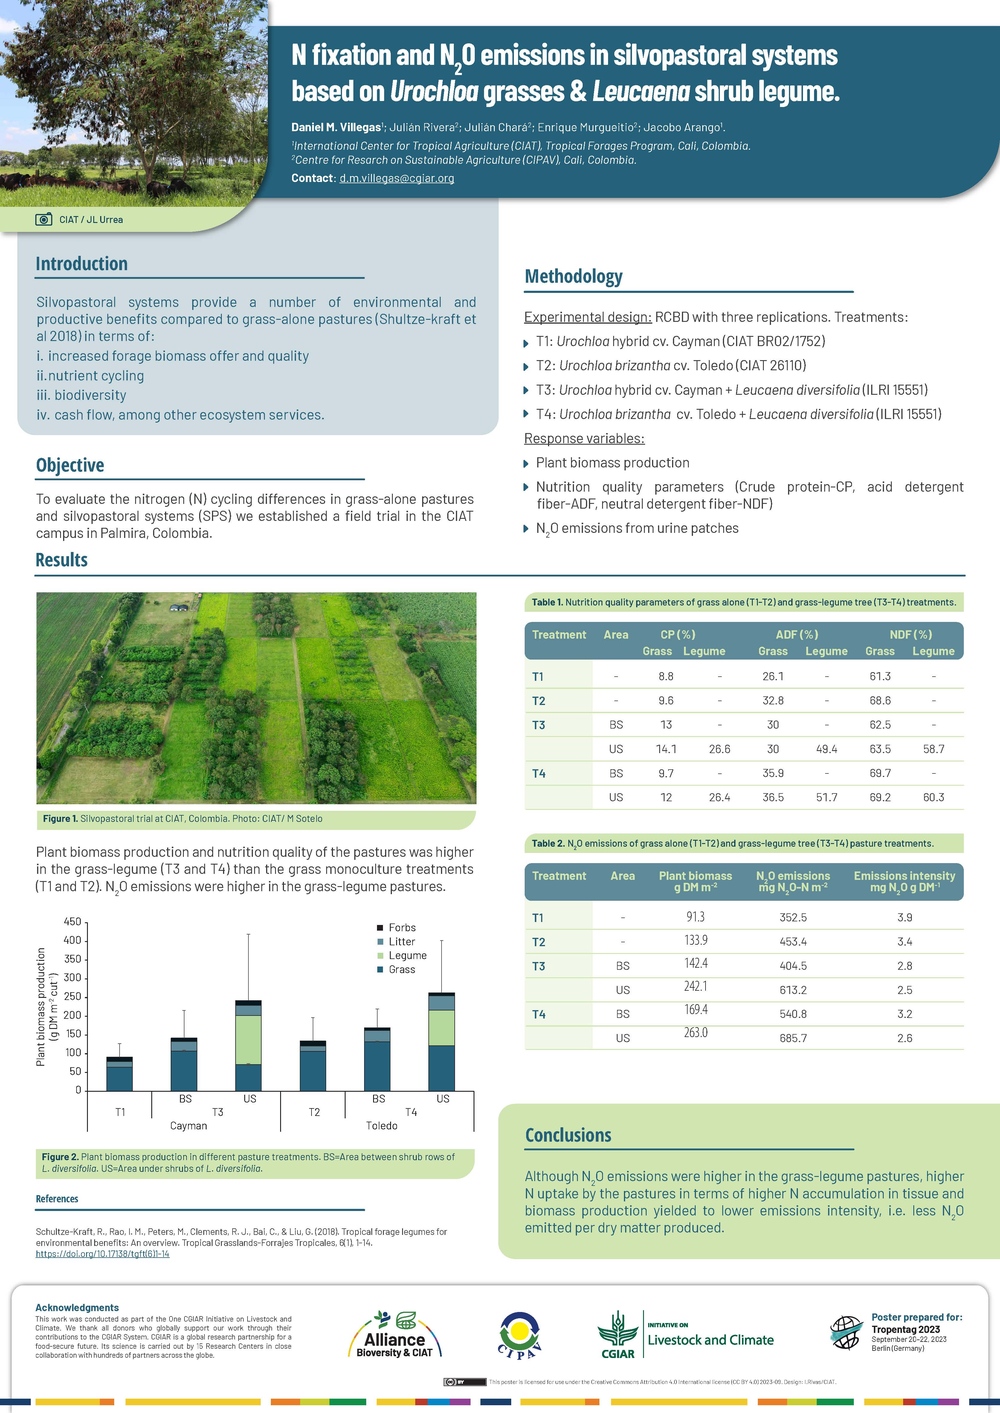 N fixation and N2O emissions in silvopastoral systems based on Urochloa grasses & Leucaena shrub legume 